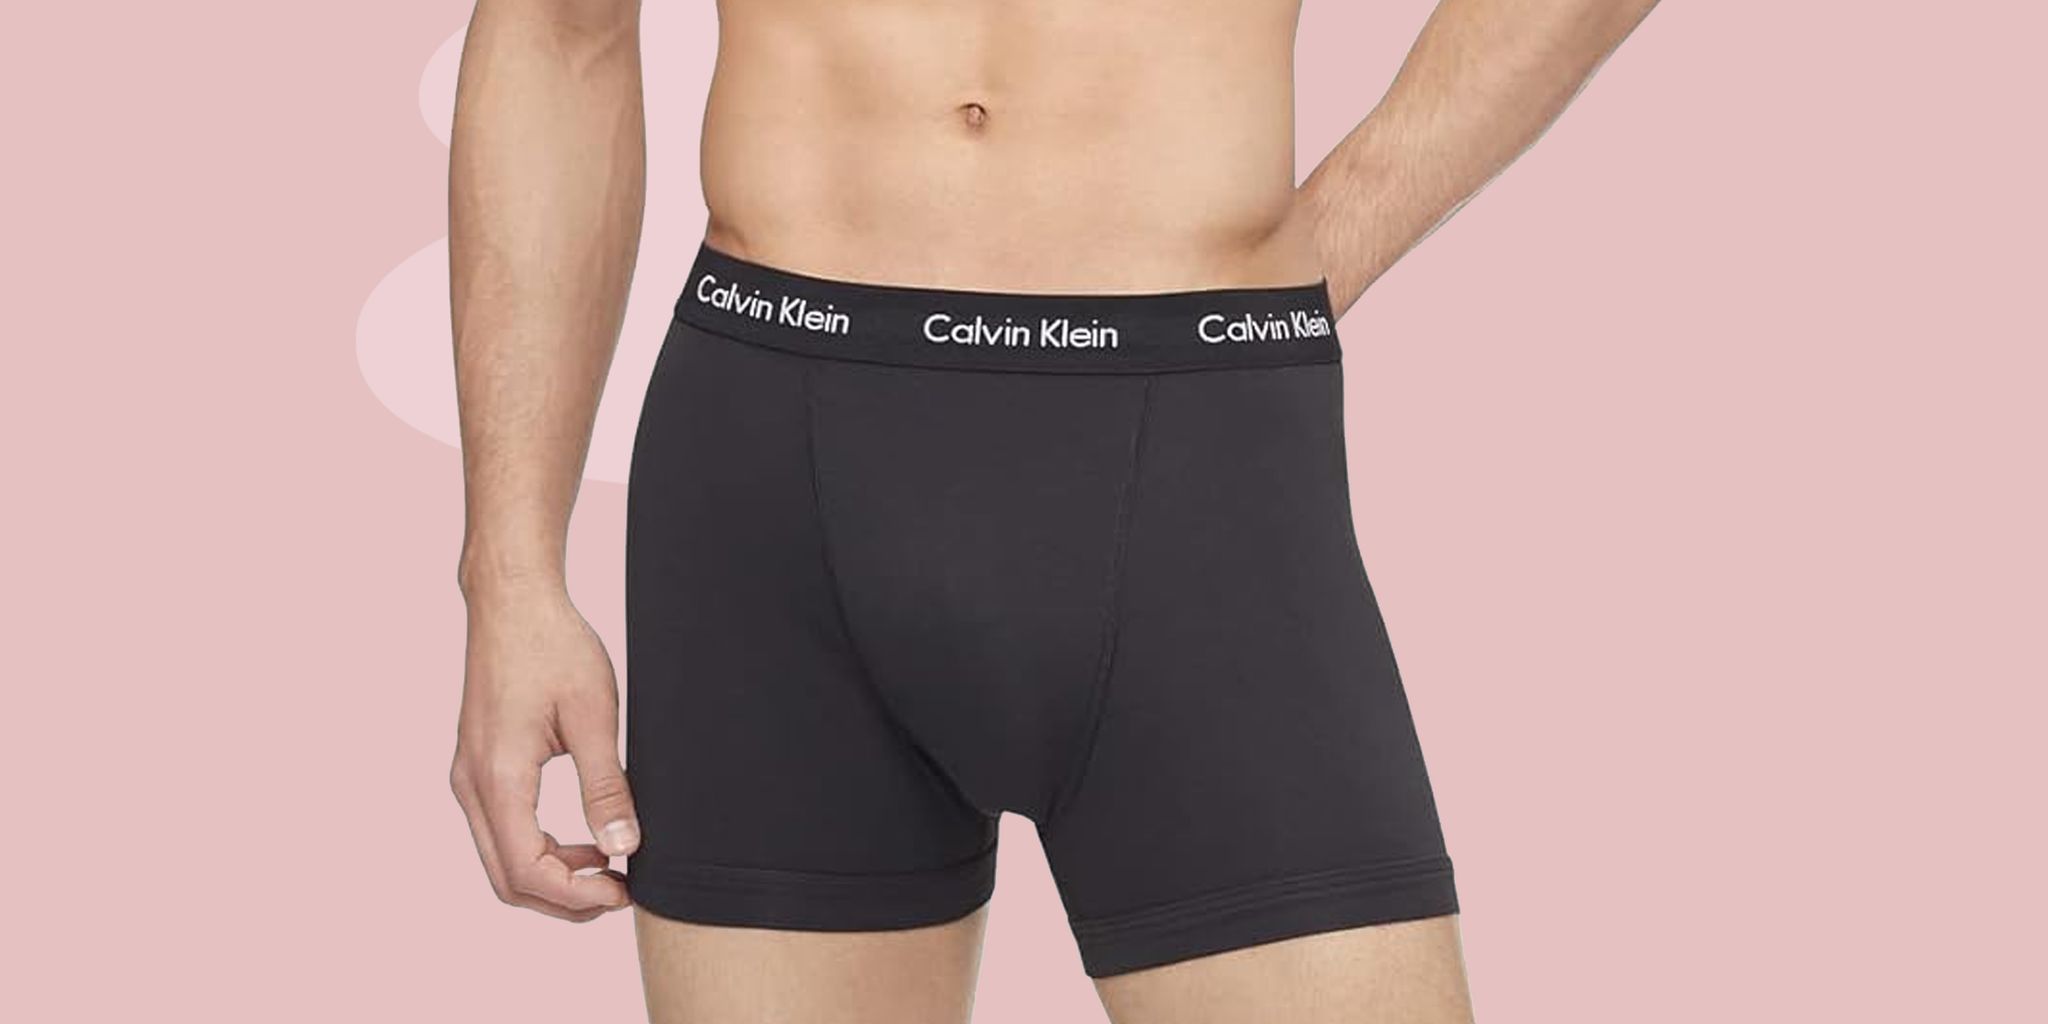 Calvin Klein Men`s CK One Micro Hip Briefs 1 Pack